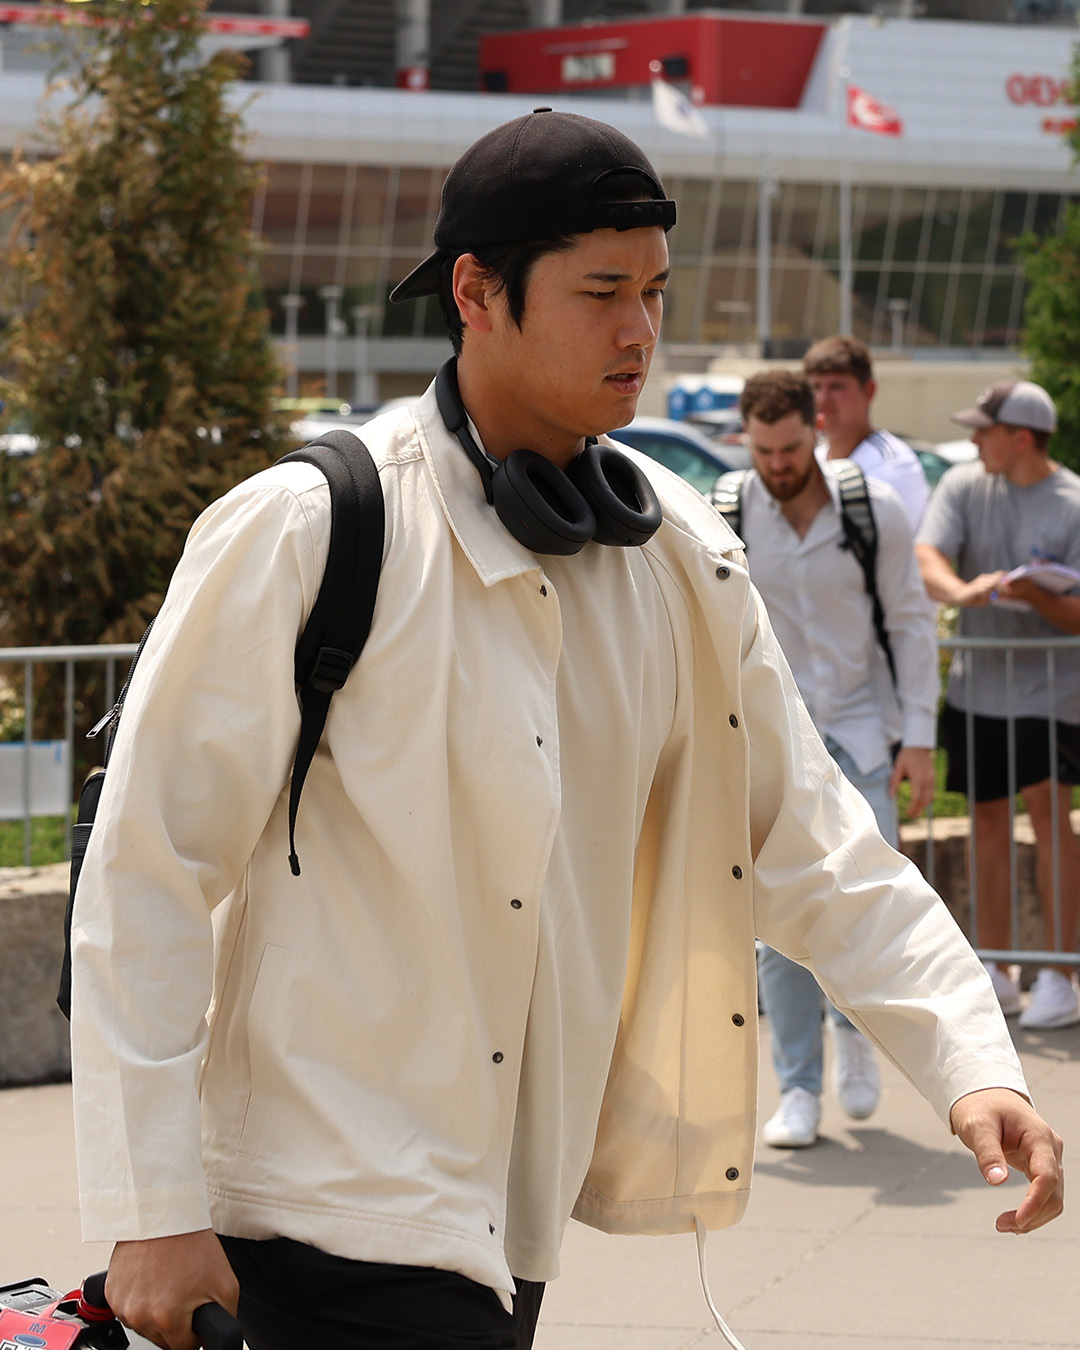 MLB Life on X: Shohei Ohtani arriving in Kansas City for the